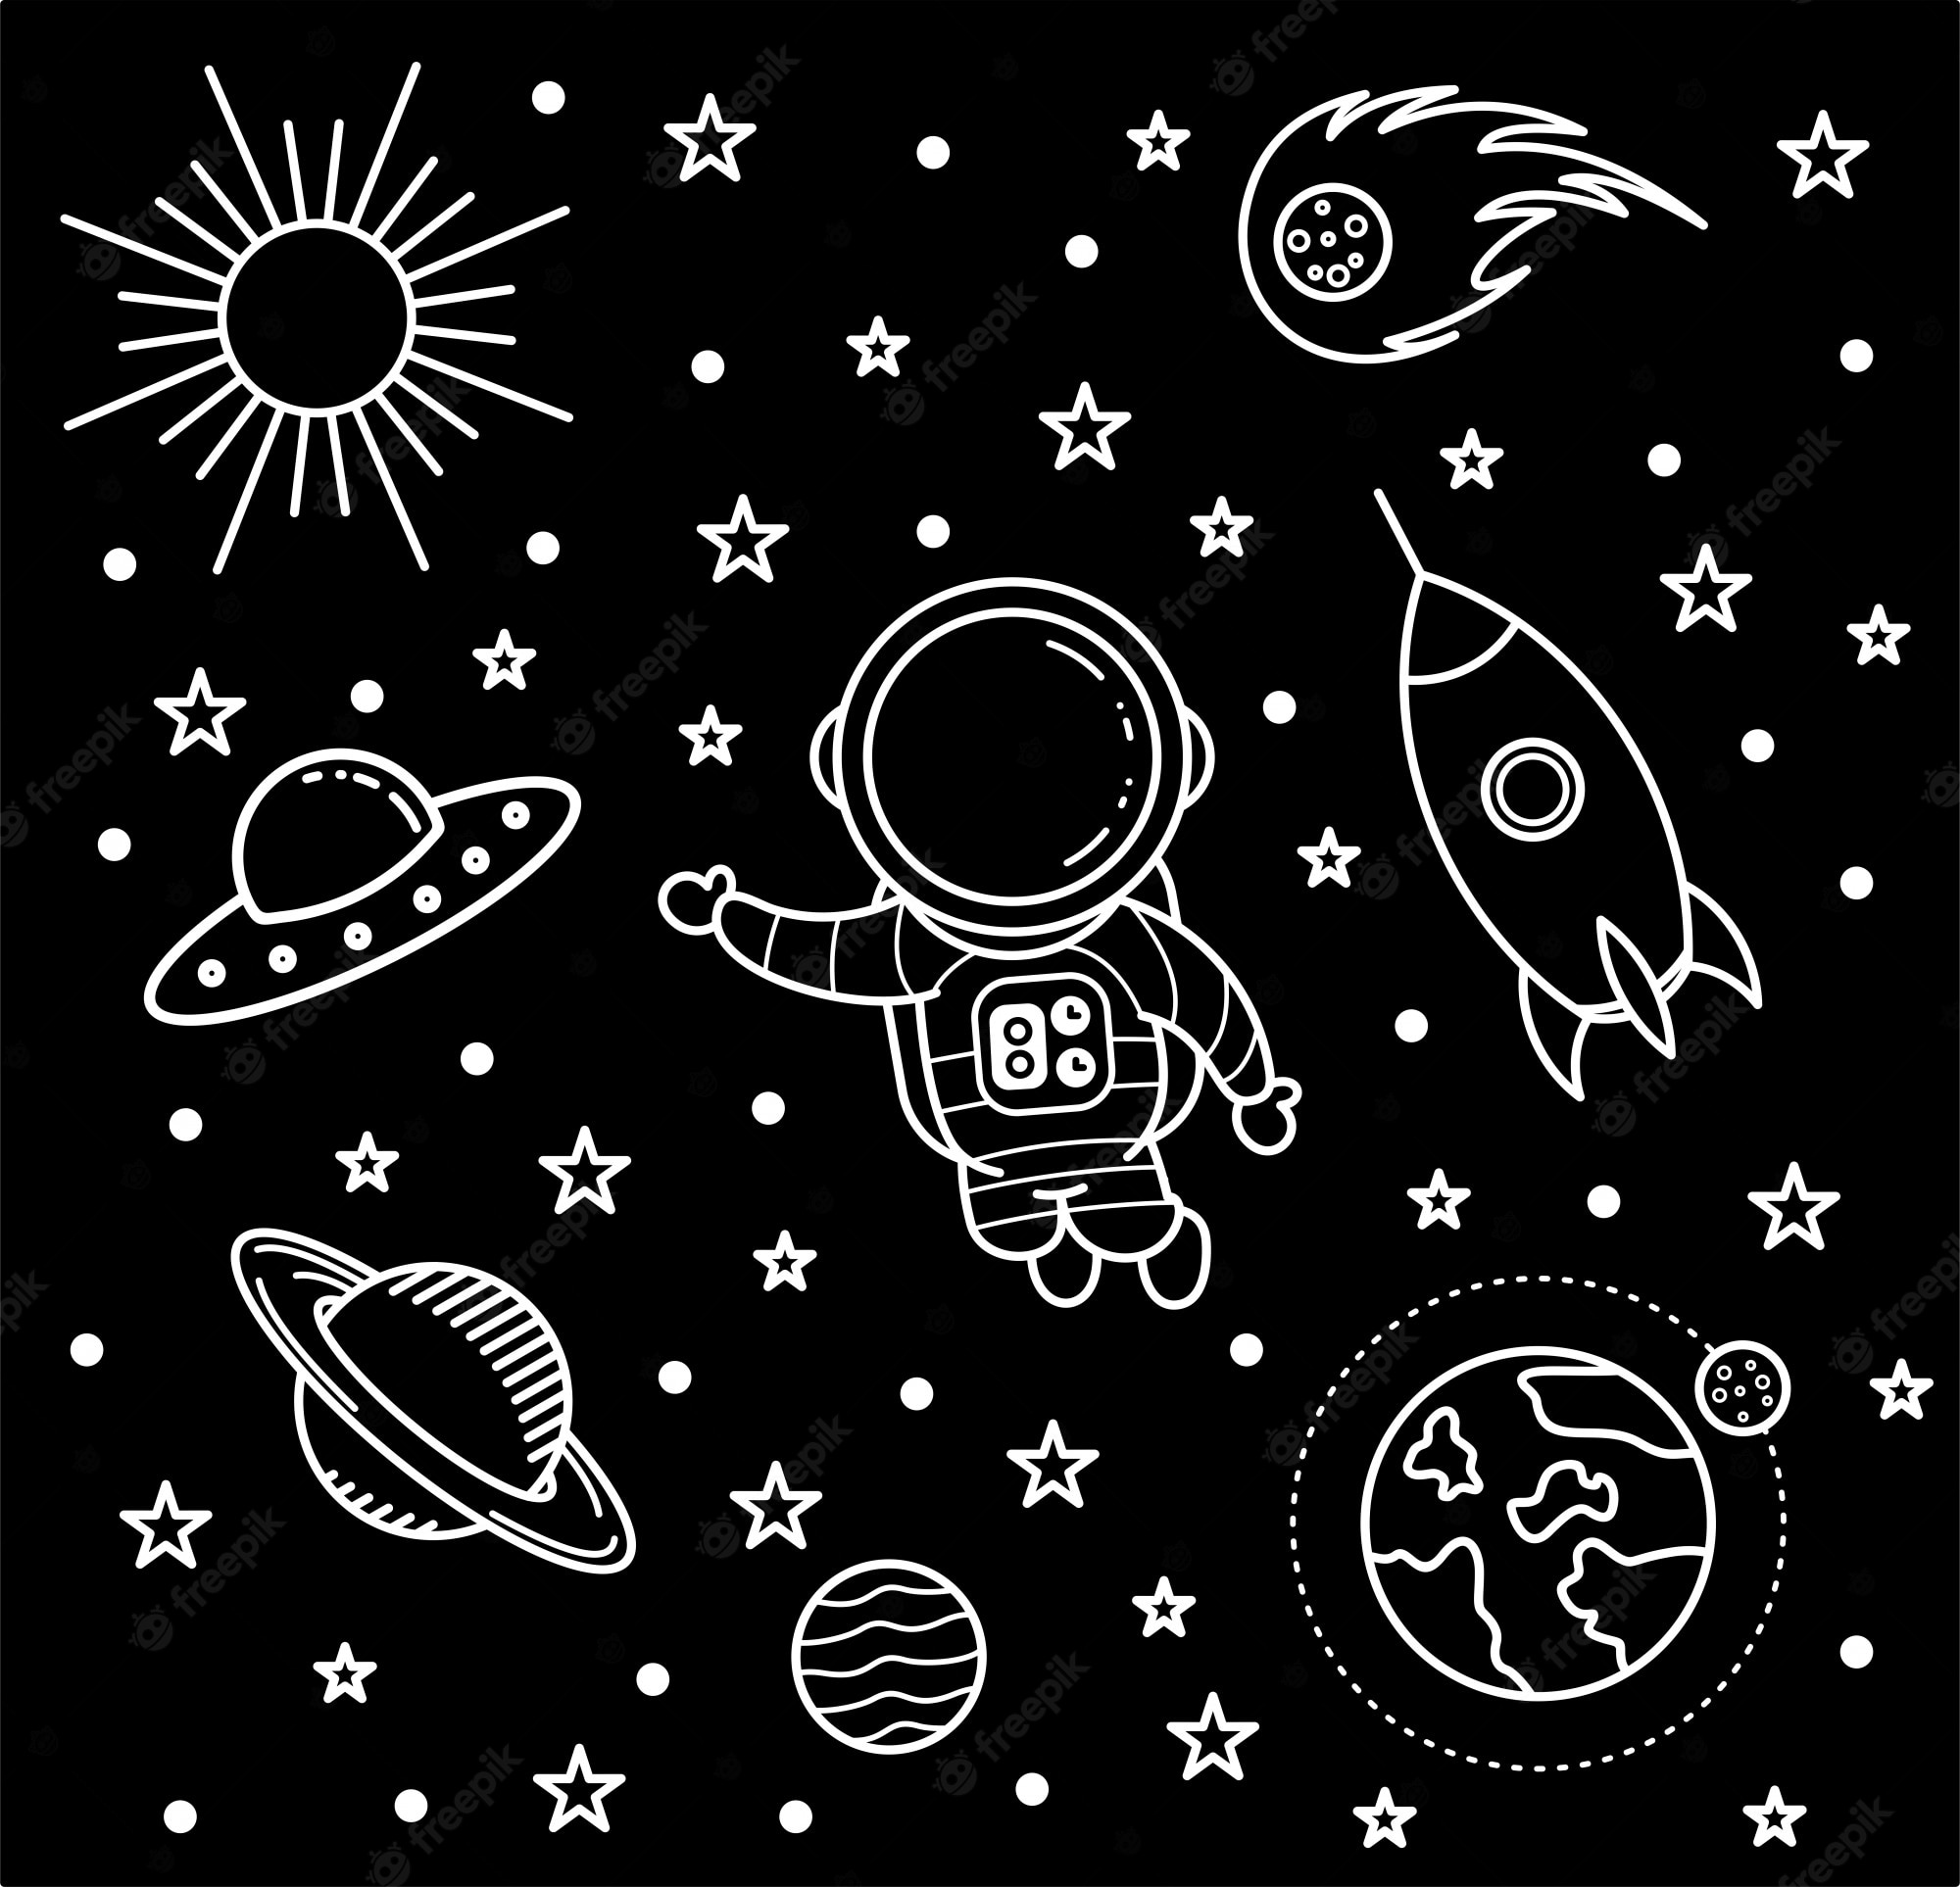 Premium Vector. Doodle art, black and white astronaut wallpaper